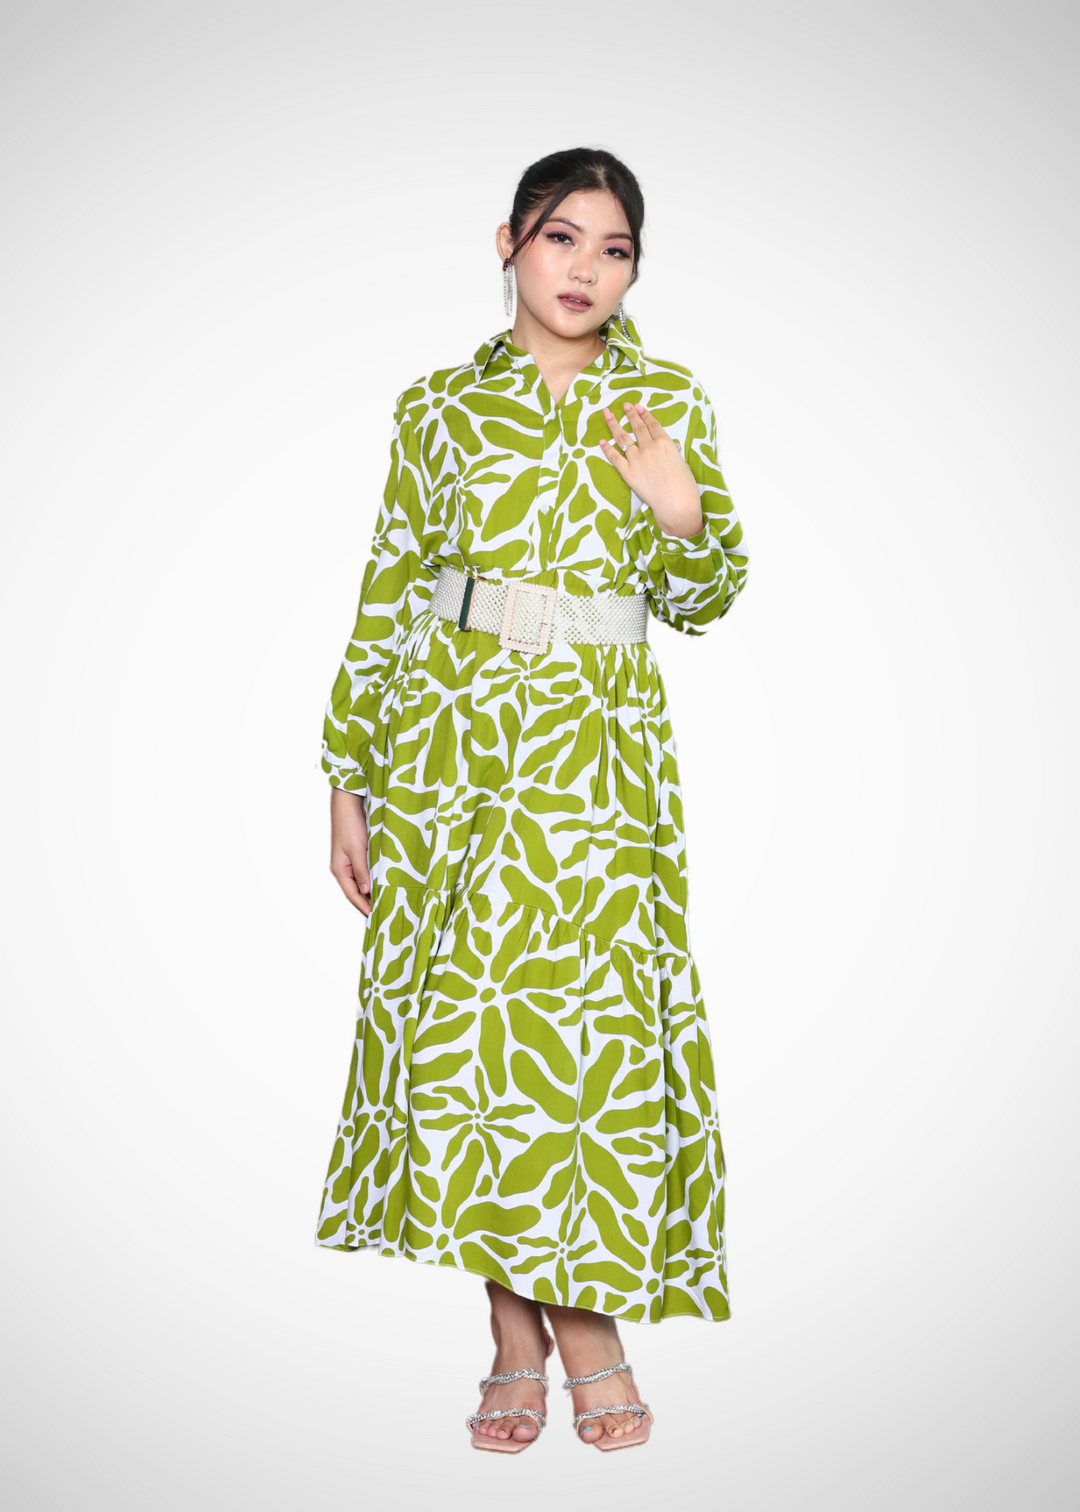 Alish Green Flowy Printed Long Length Lawn Dress - RMLI